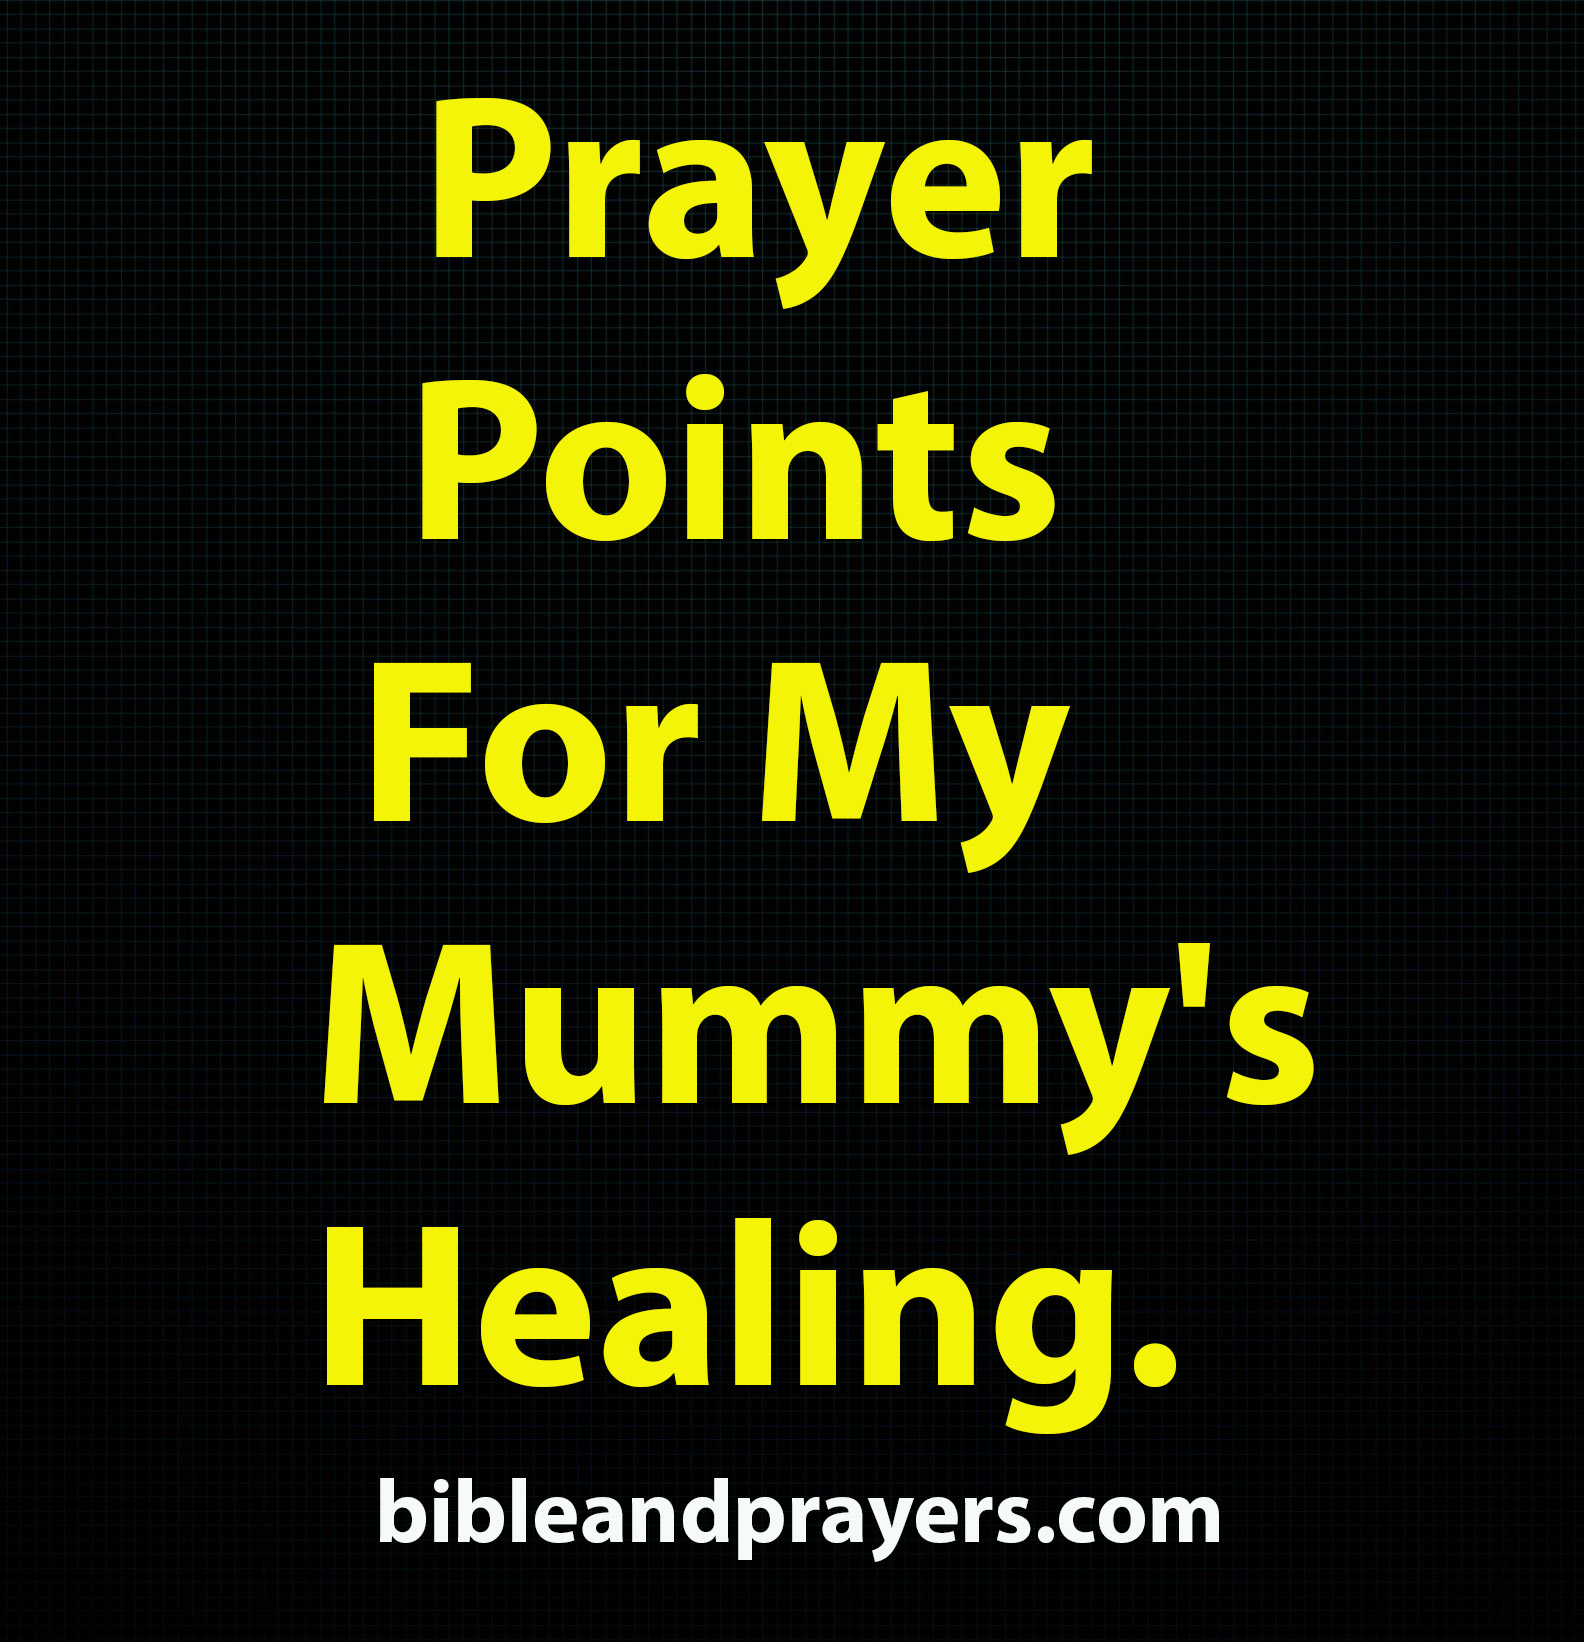 Prayer Points For My Mummy's Healing.